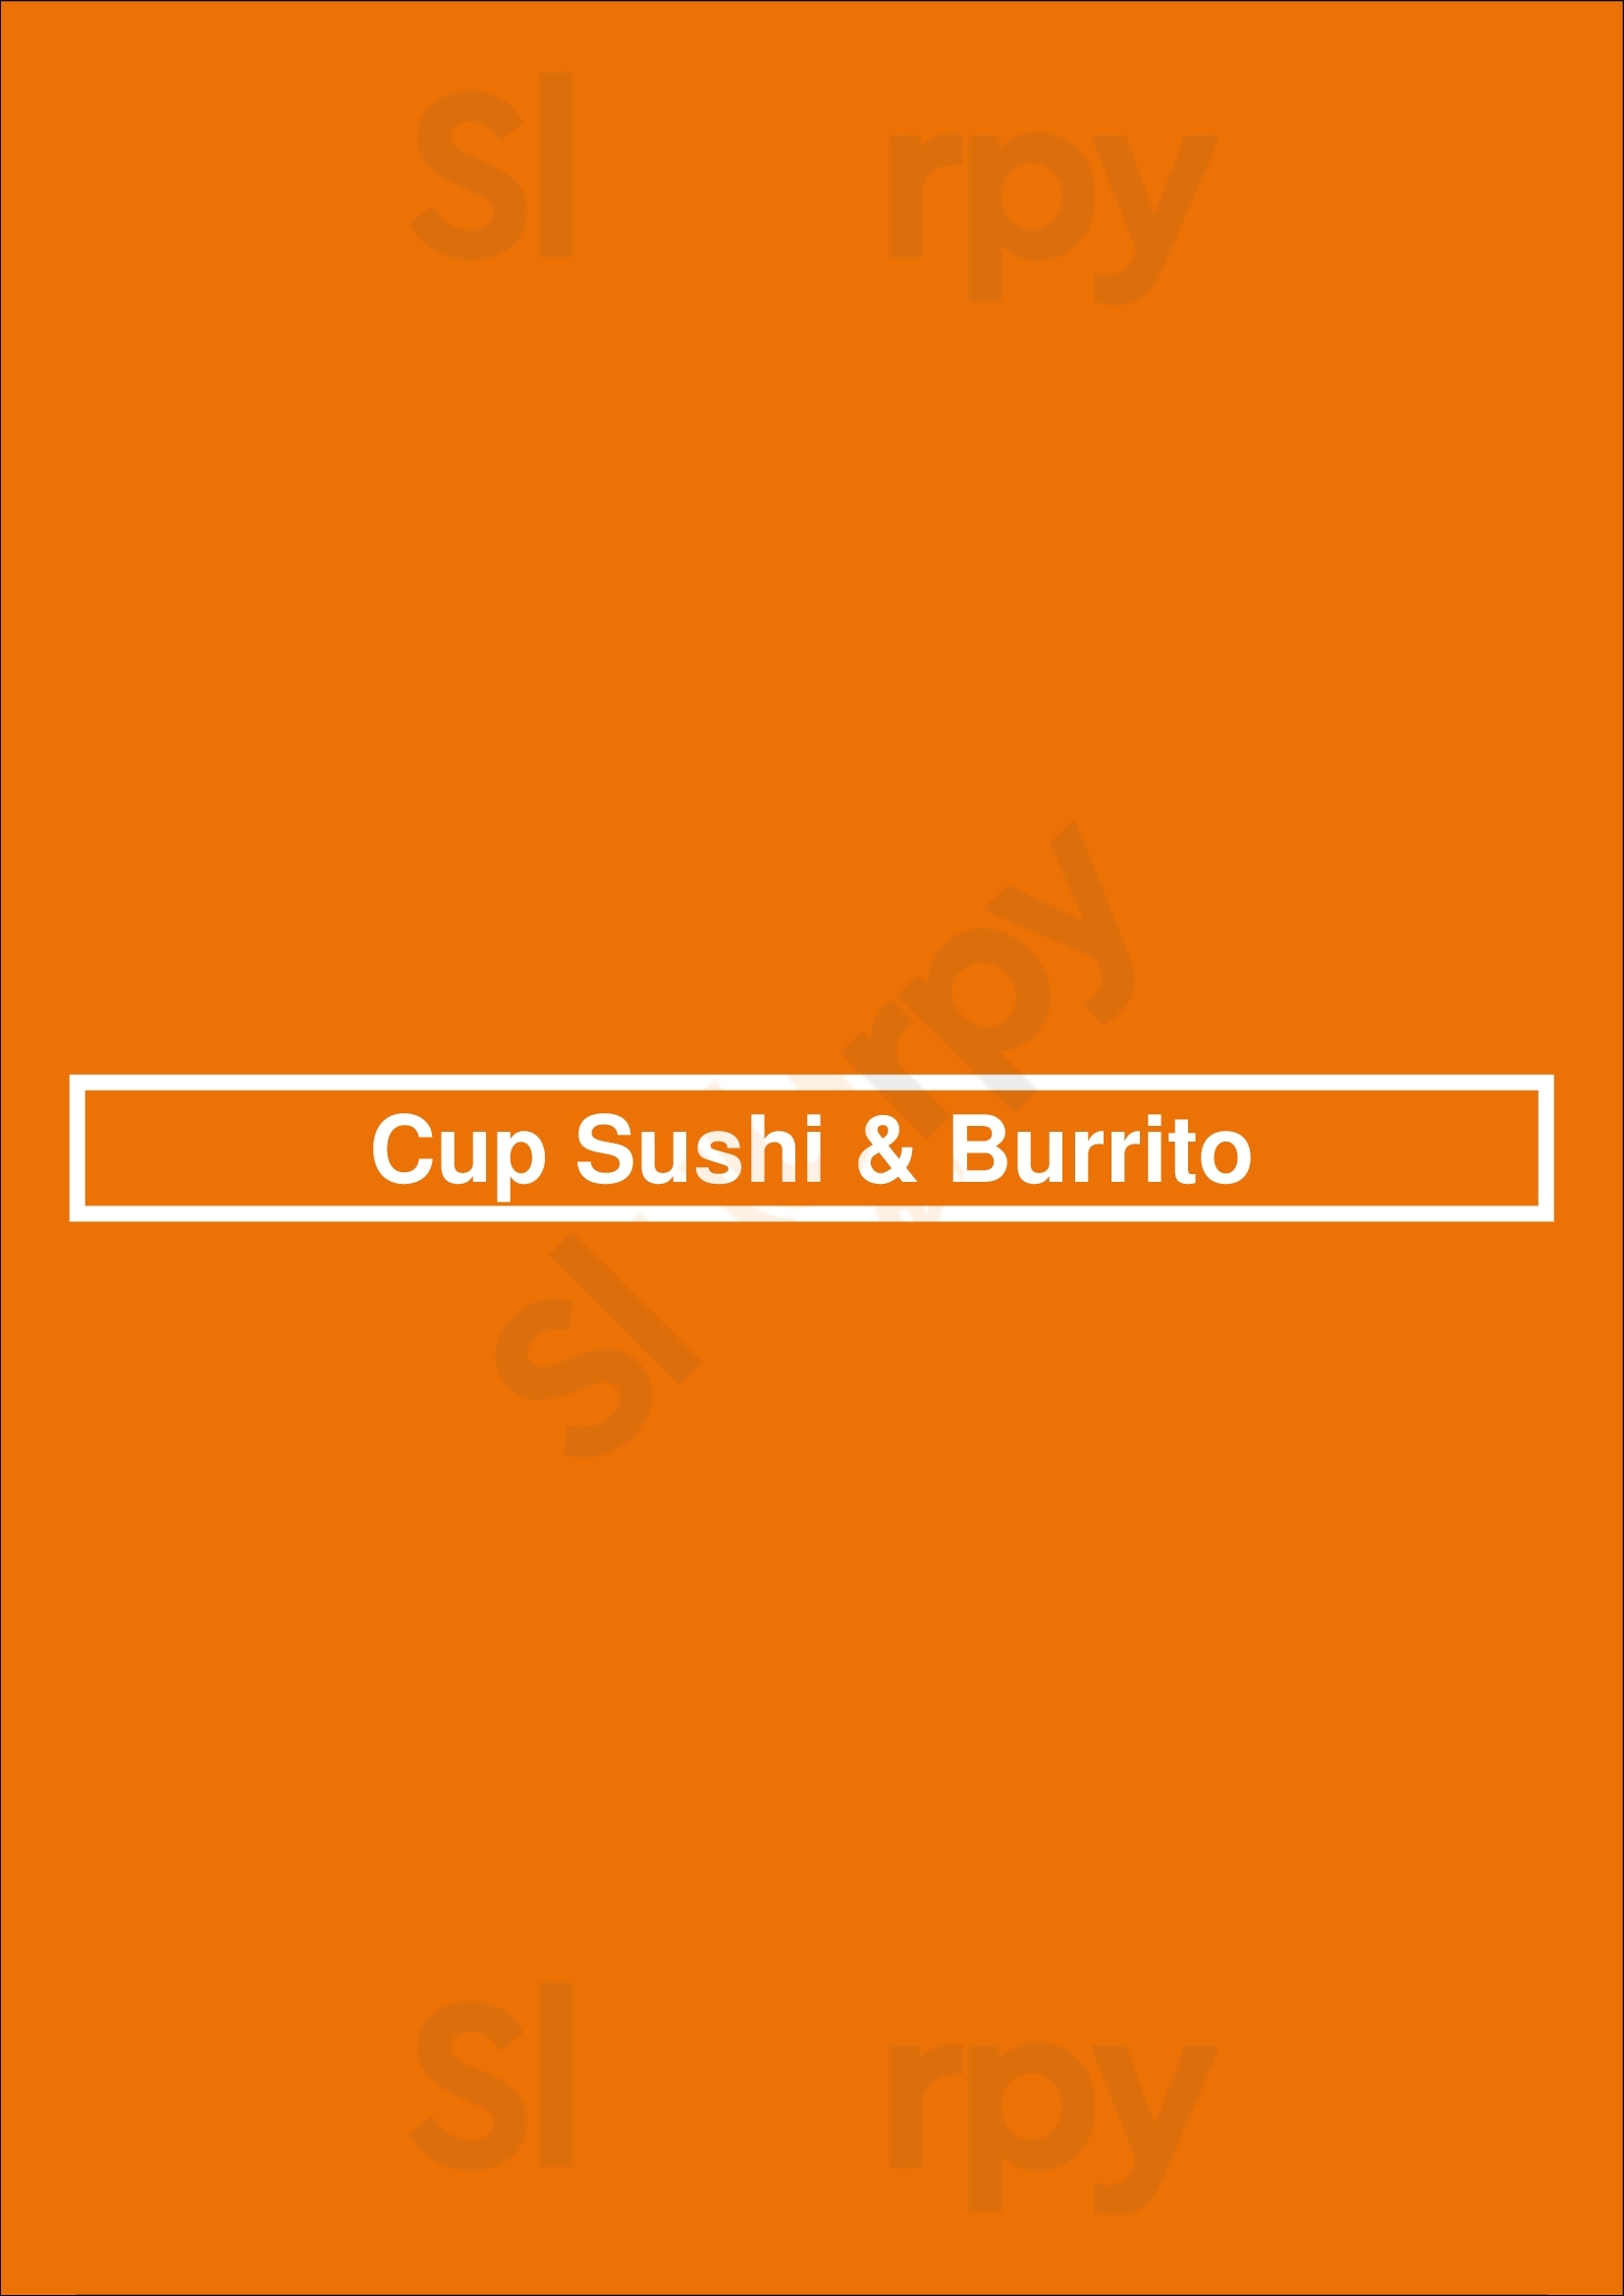 Cup Sushi & Burrito Vancouver Menu - 1